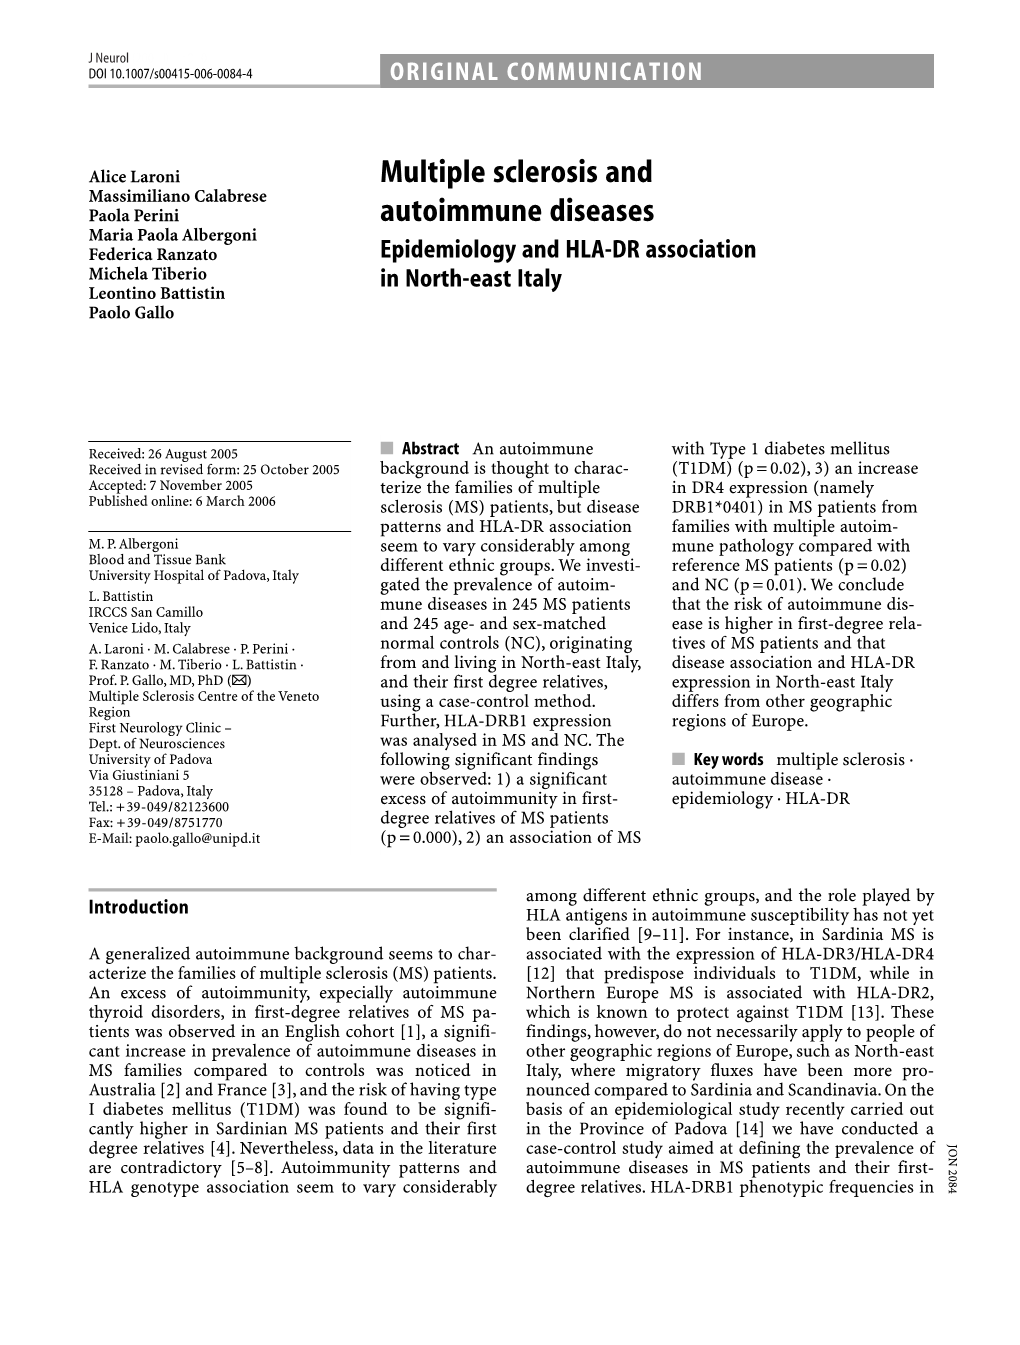 Multiple Sclerosis and Autoimmune Diseases